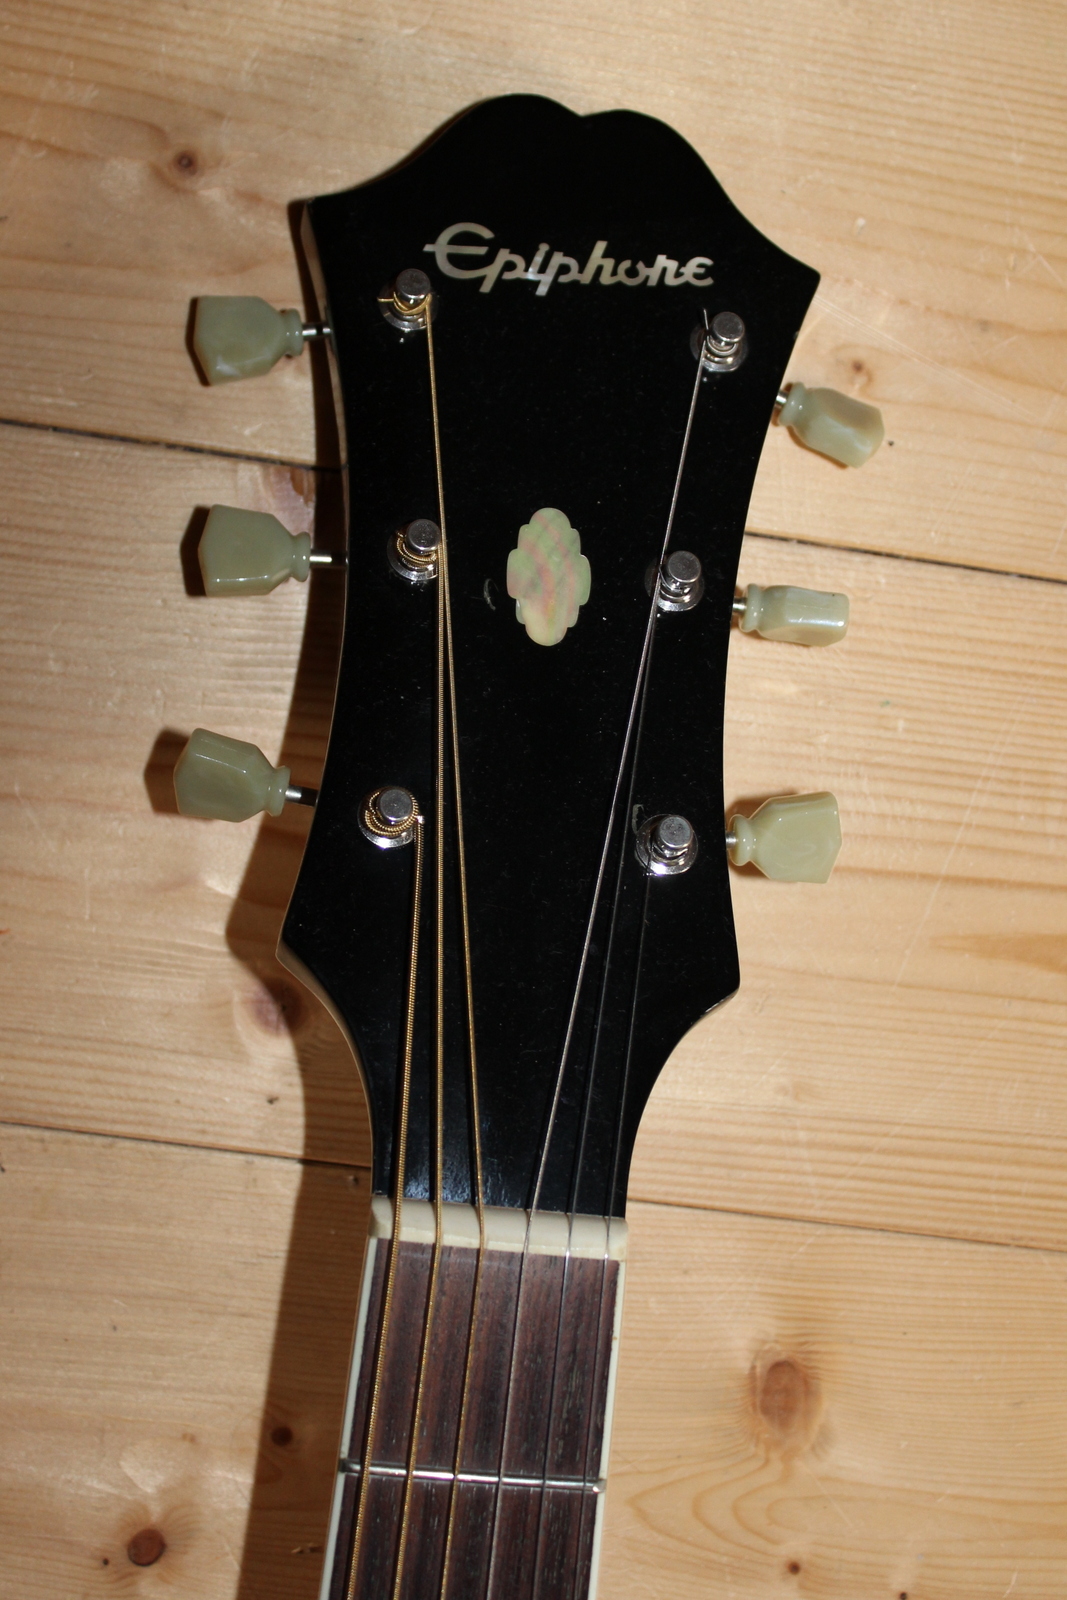 Epiphone-Frontier-Guitar-made-in-Japan-006.JPG